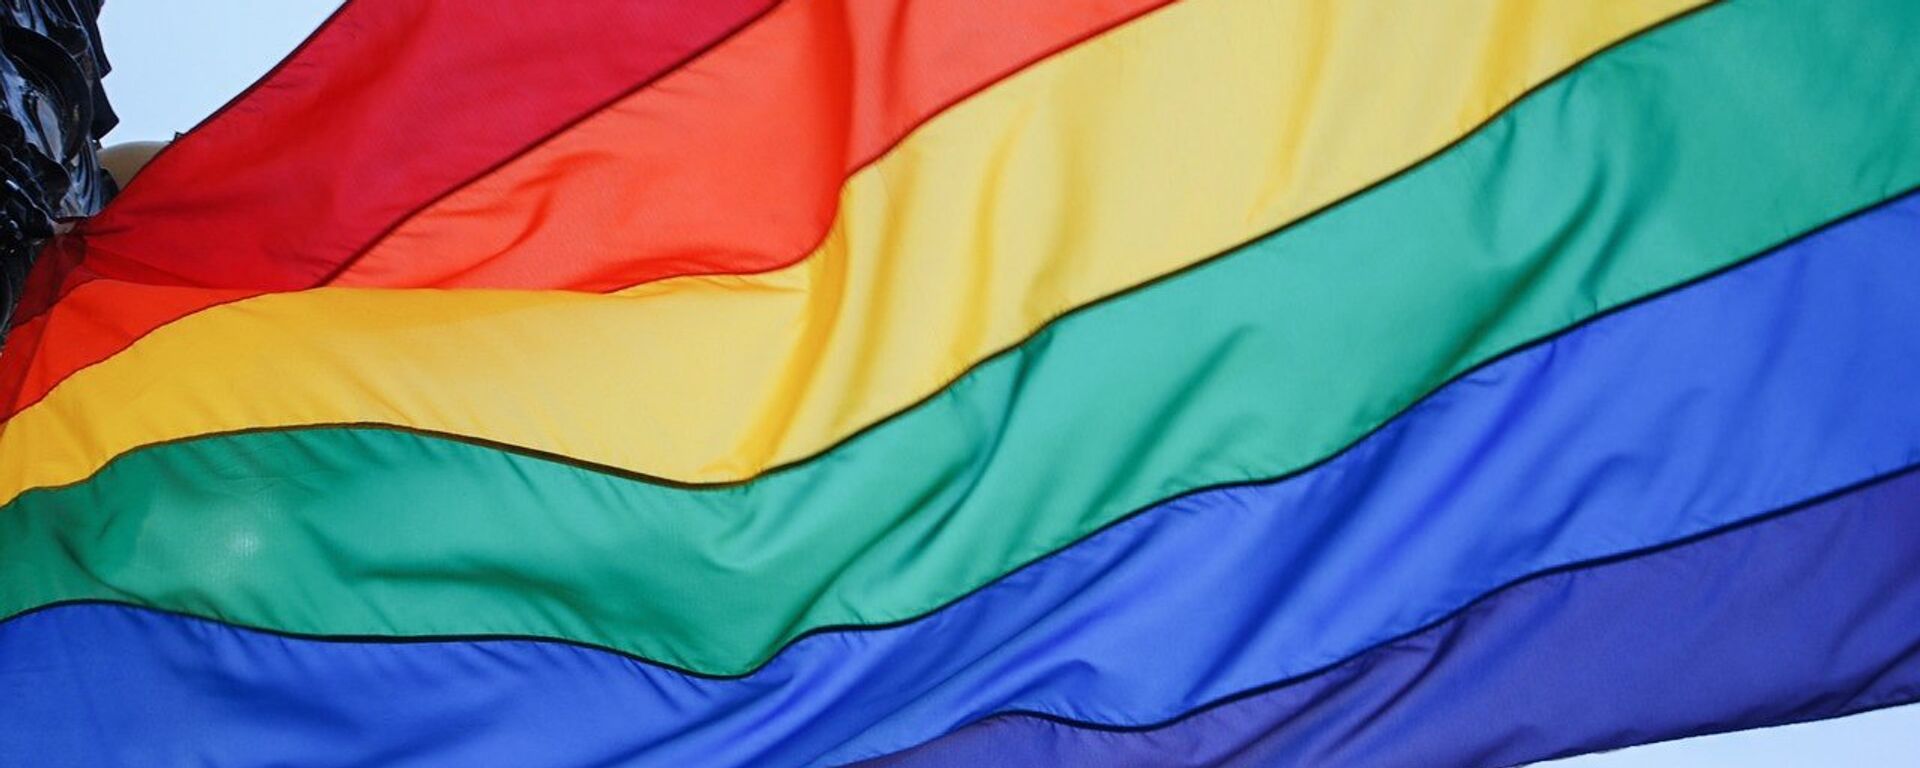 Bandera arcoíris, símbolo del movimiento LGBT - Sputnik Mundo, 1920, 04.08.2020